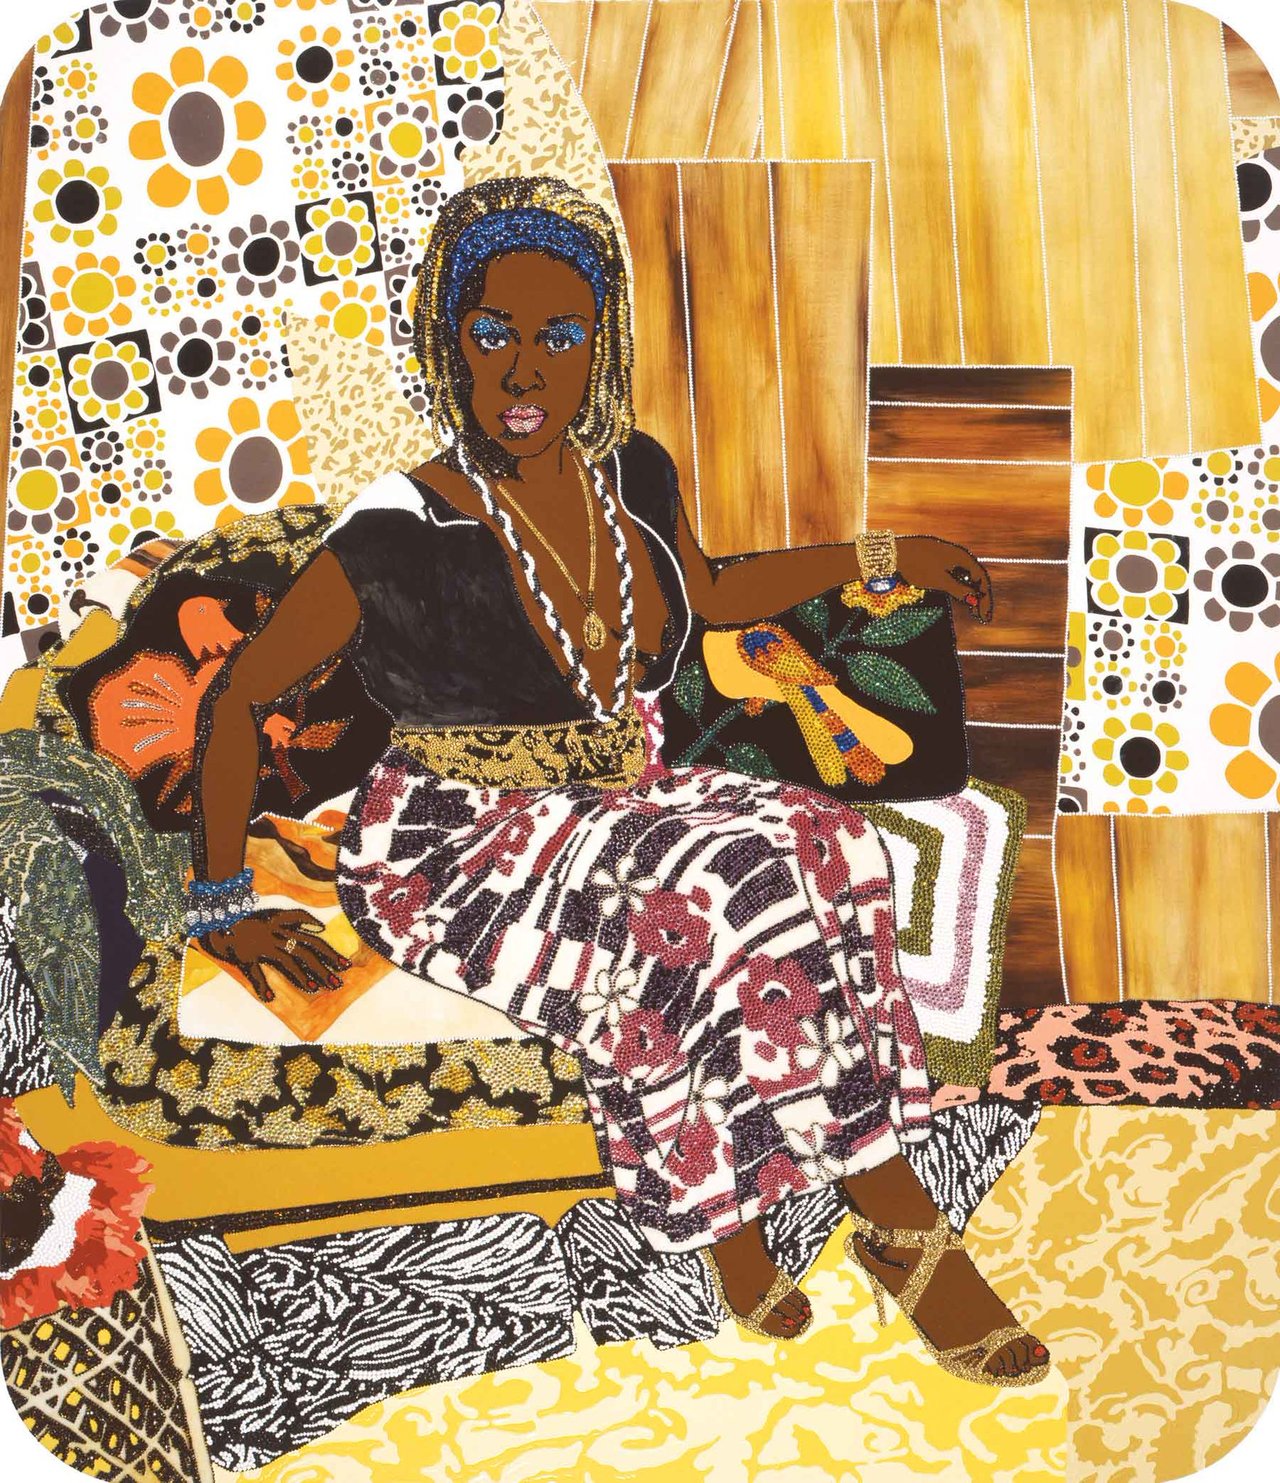 RT @womensart1: African American artist Mickalene Thomas, This Girl Could be Dangerous, 2007 #womensart https://t.co/MAimRHaayr